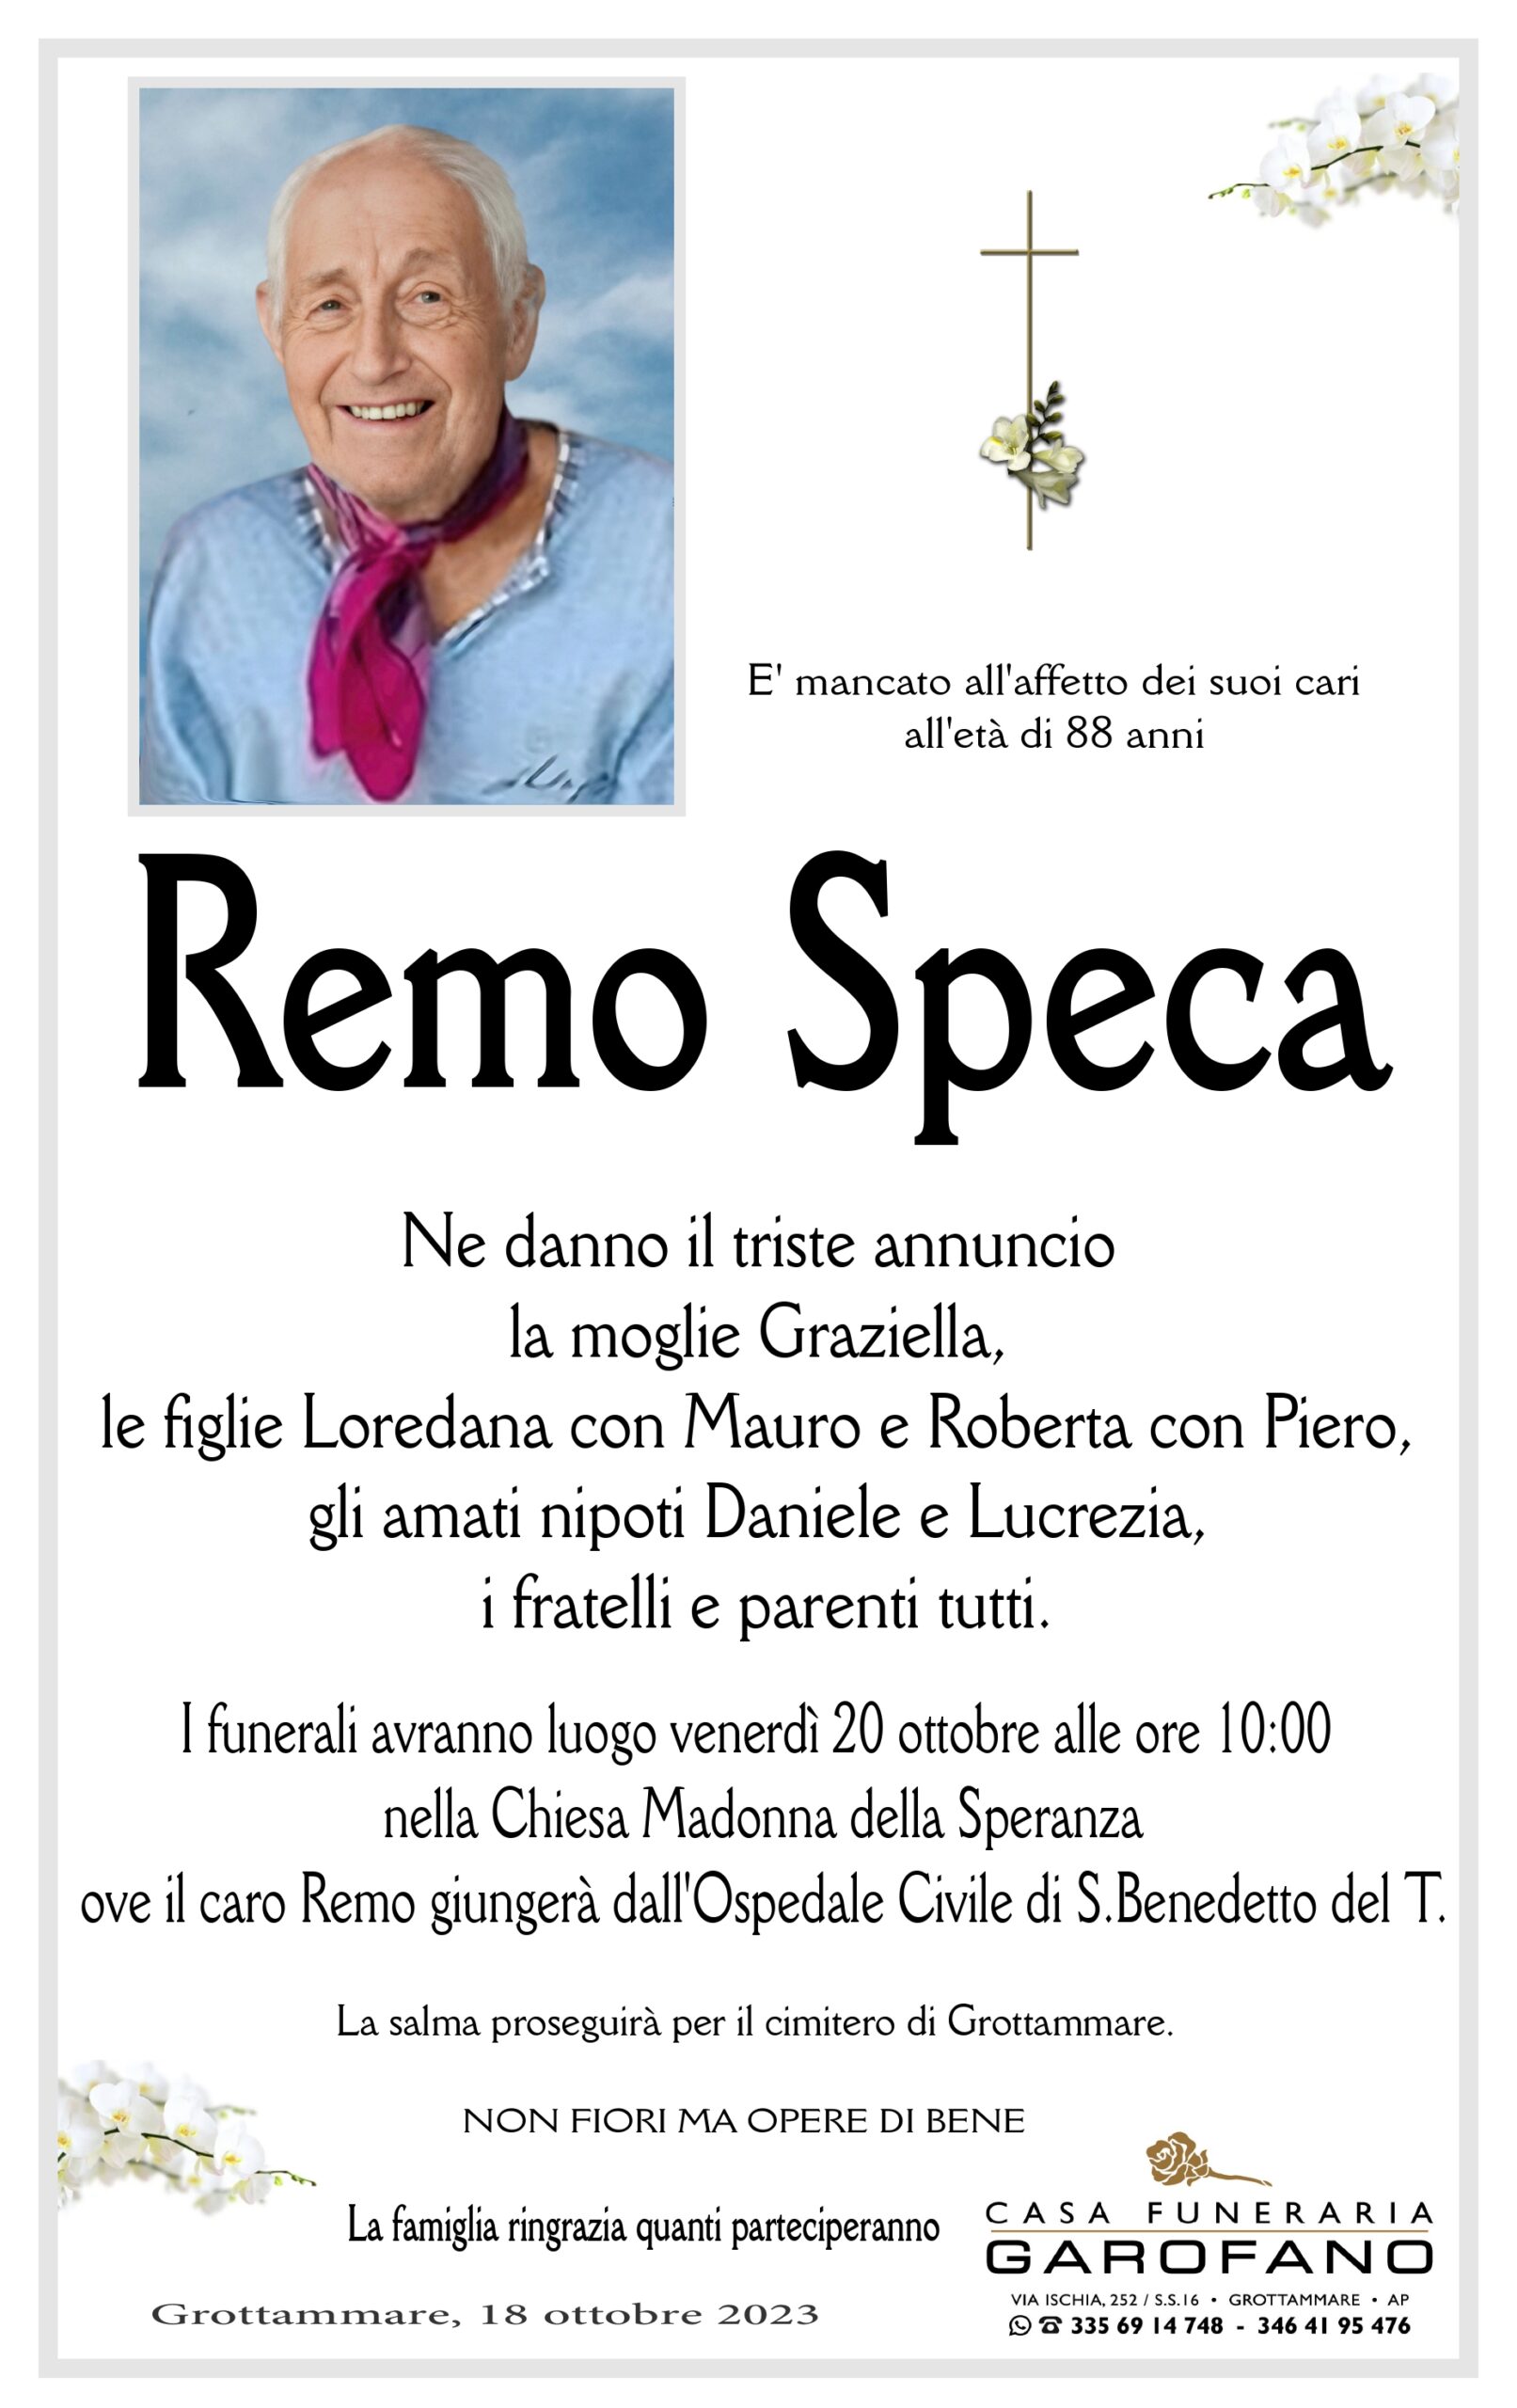 Remo Speca